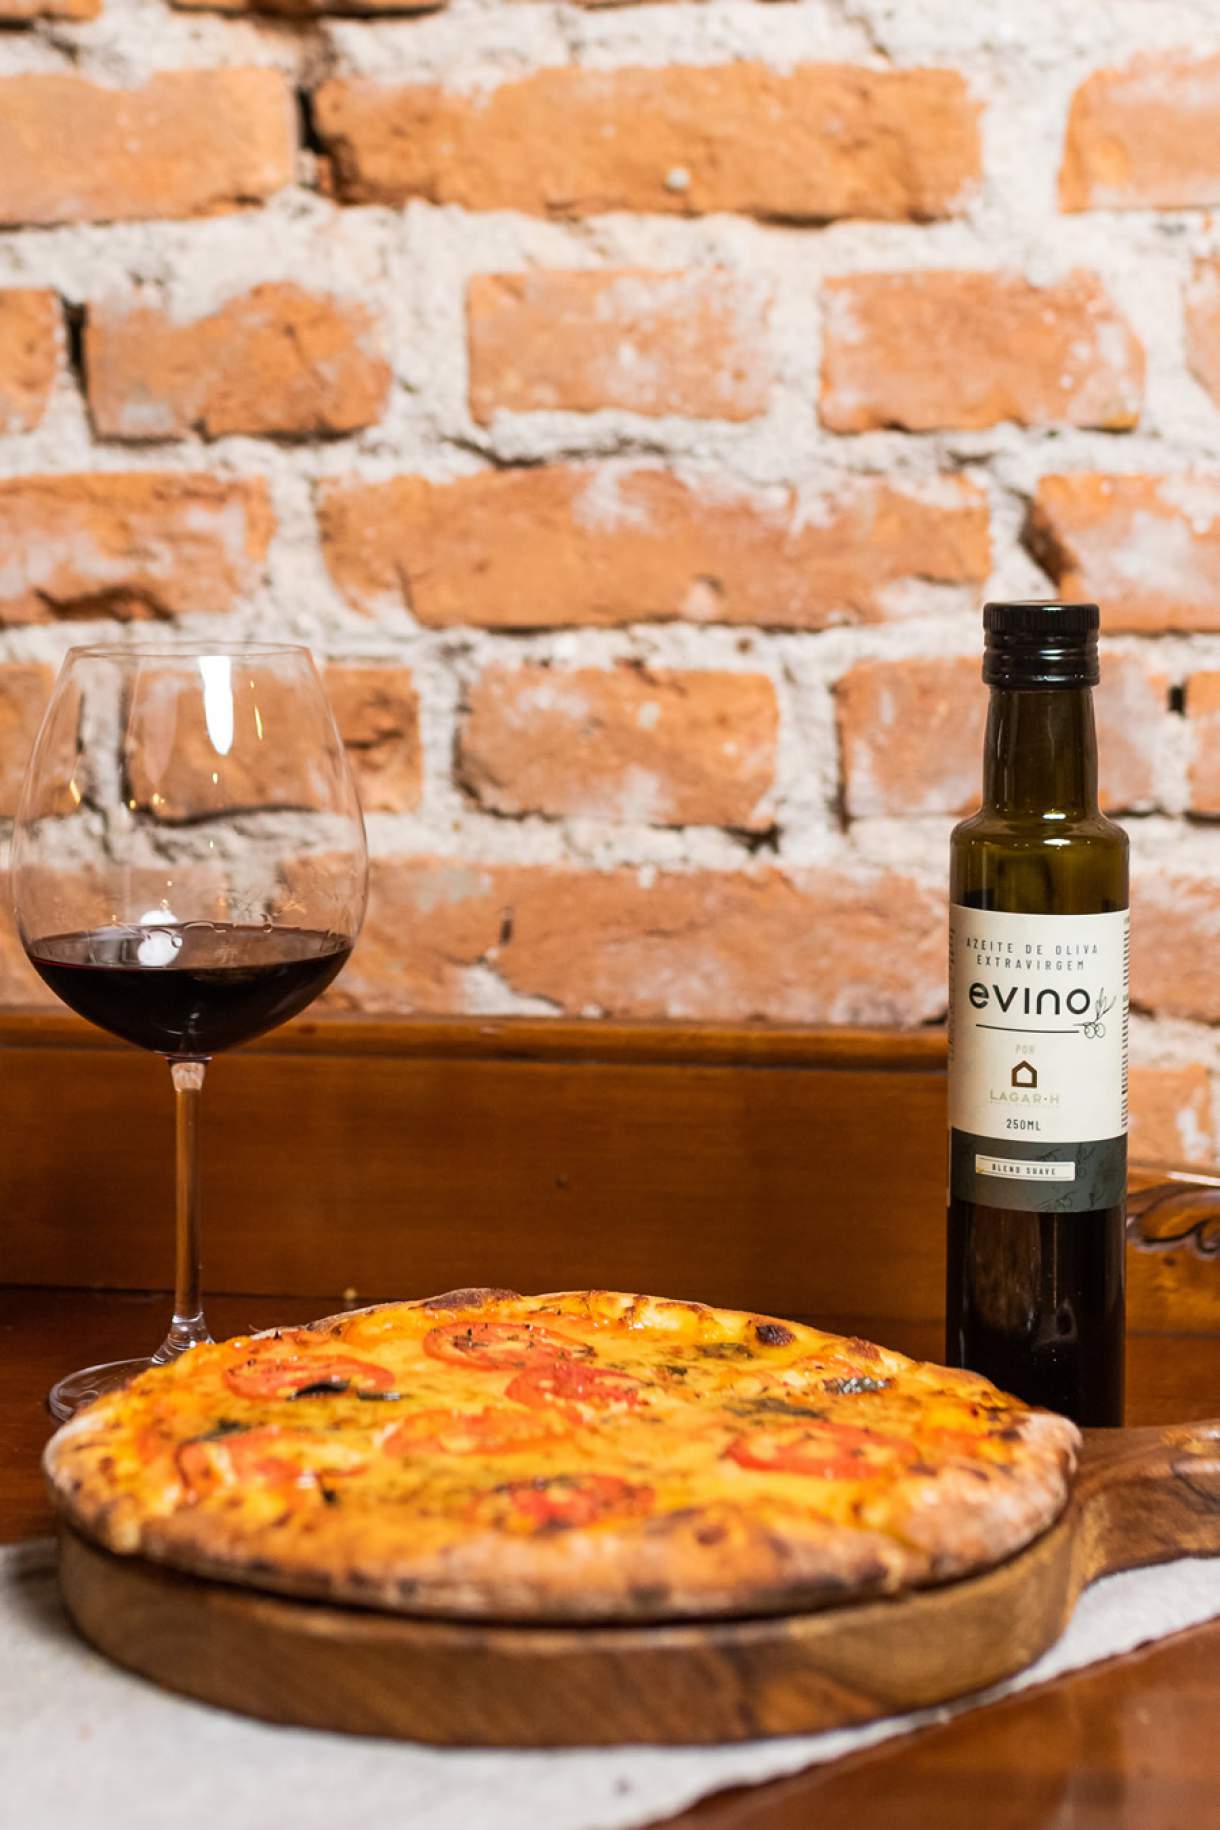 Pizza entre vinhos - Wine Locals